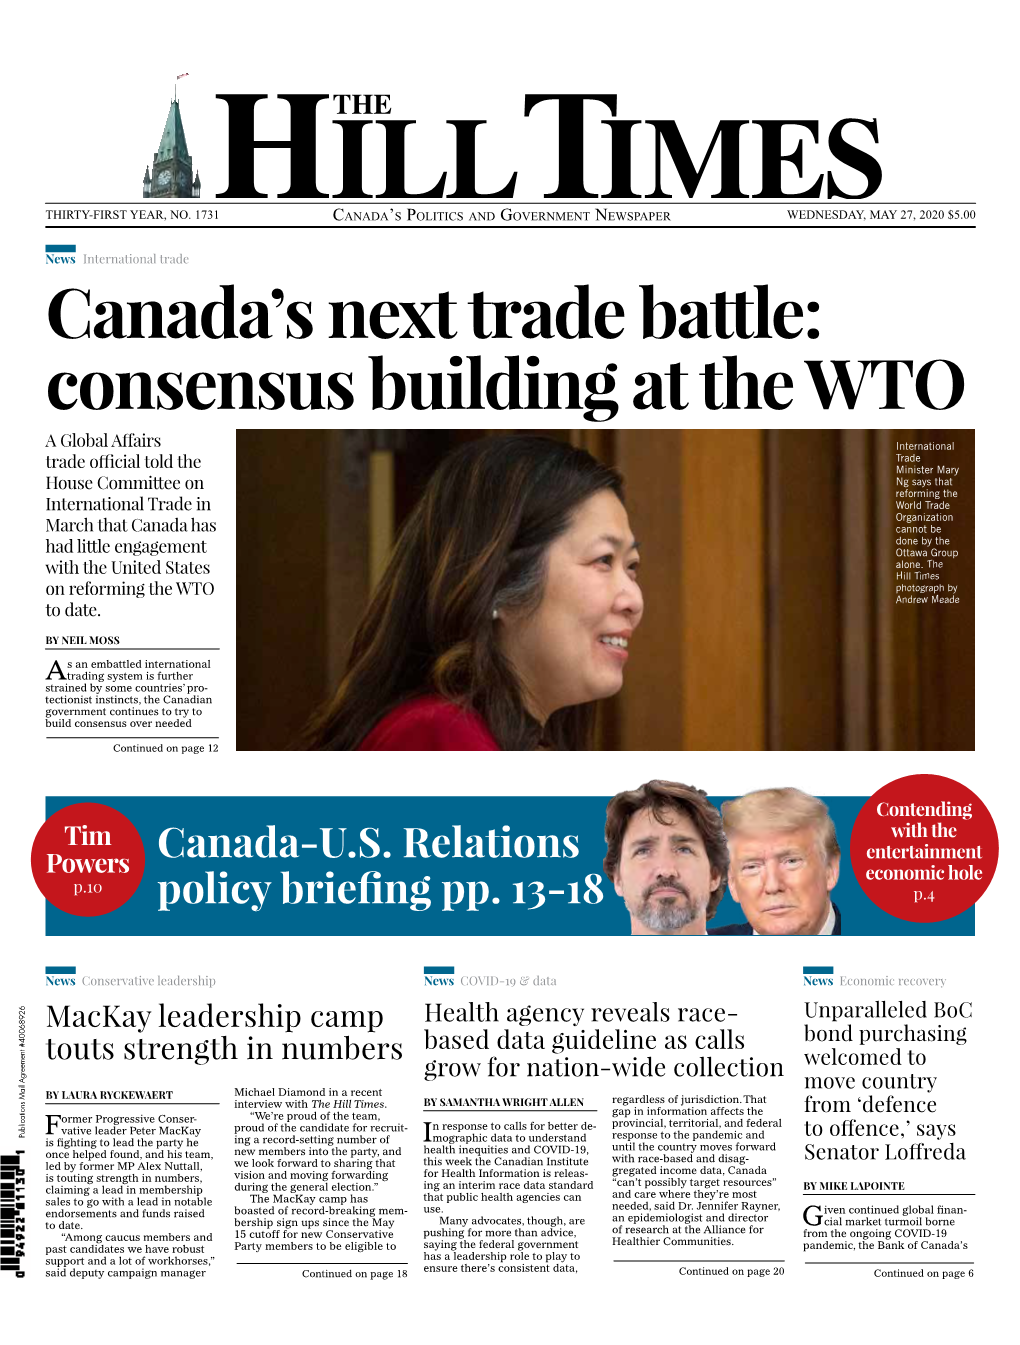 Canada's Next Trade Battle